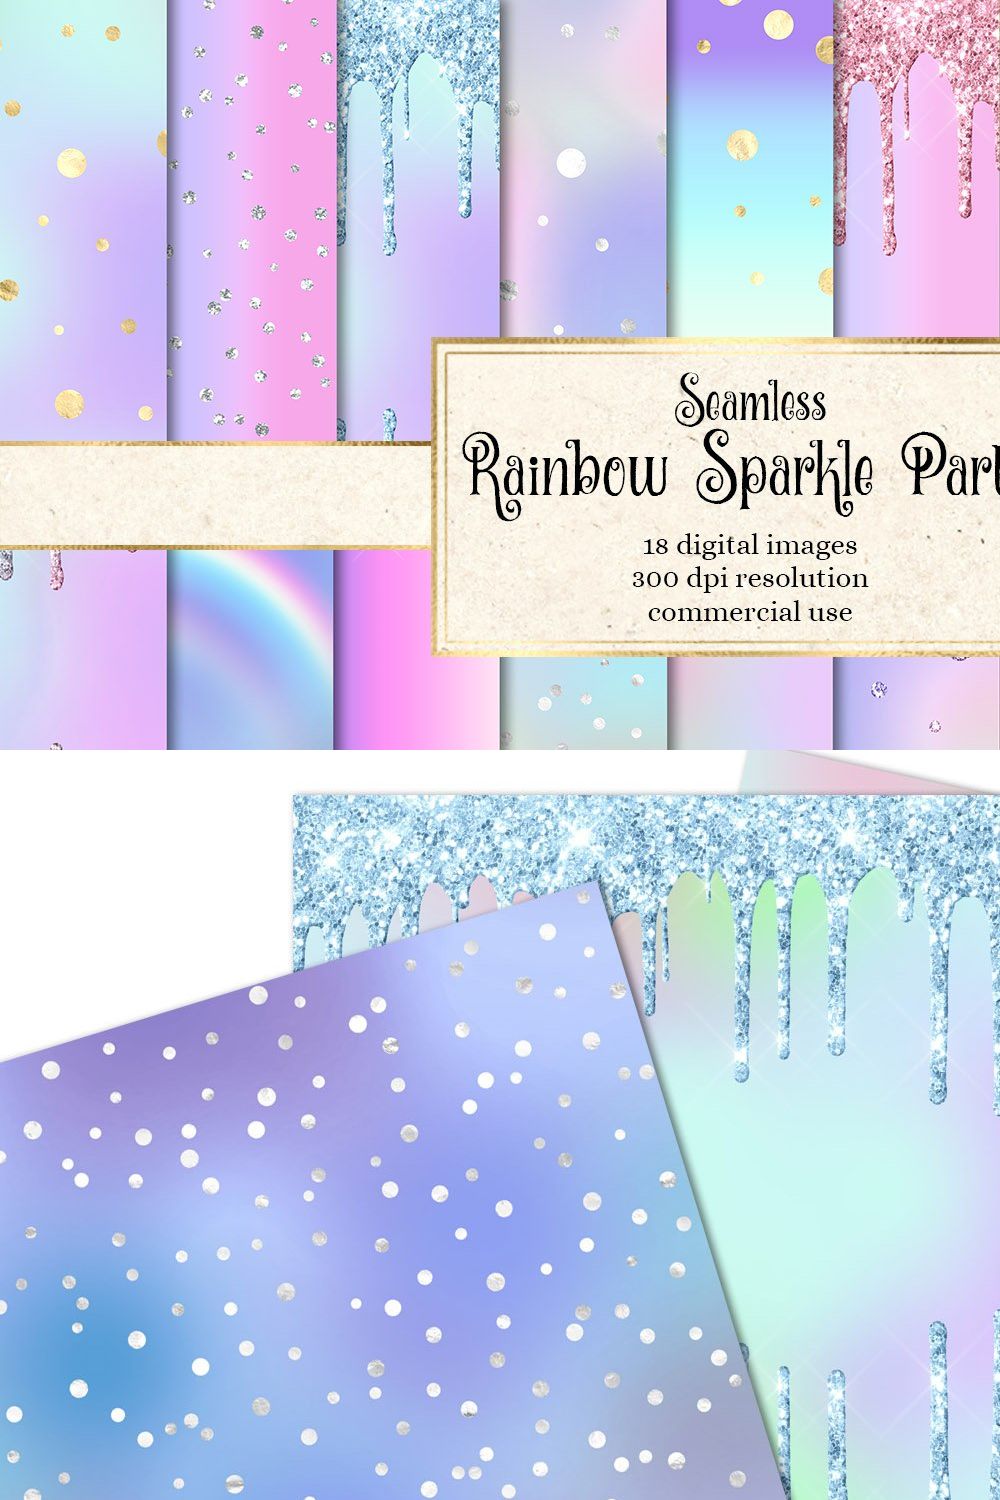 Rainbow Sparkle Party Backgrounds pinterest preview image.